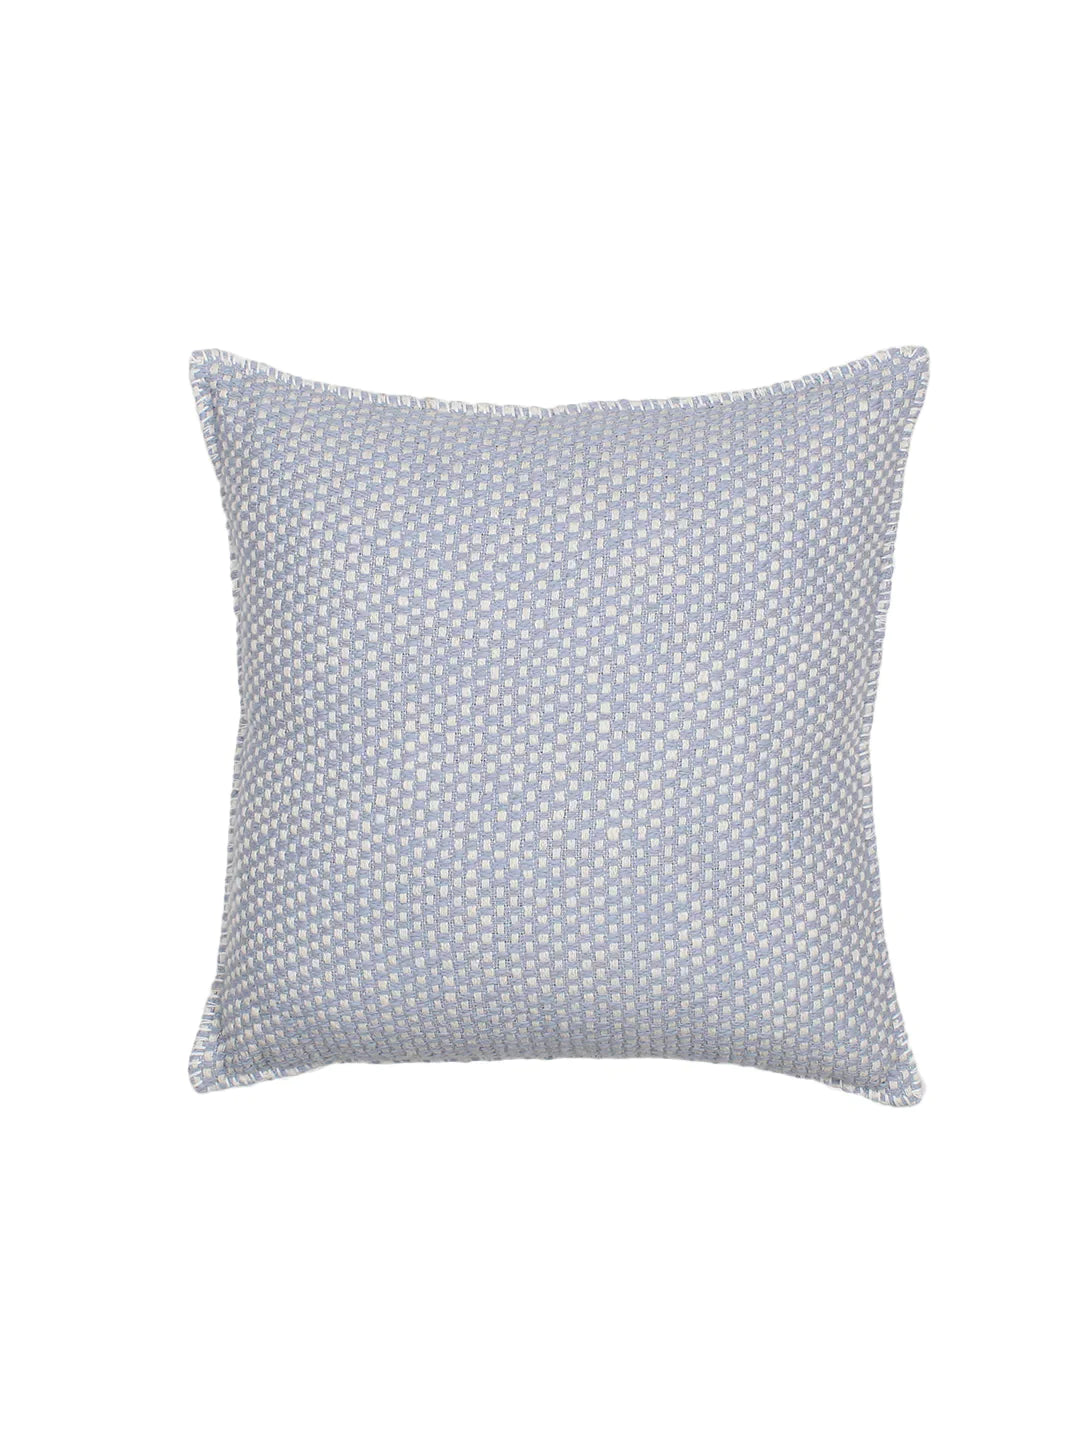 Vindhya Cushion Cover- Light Blue